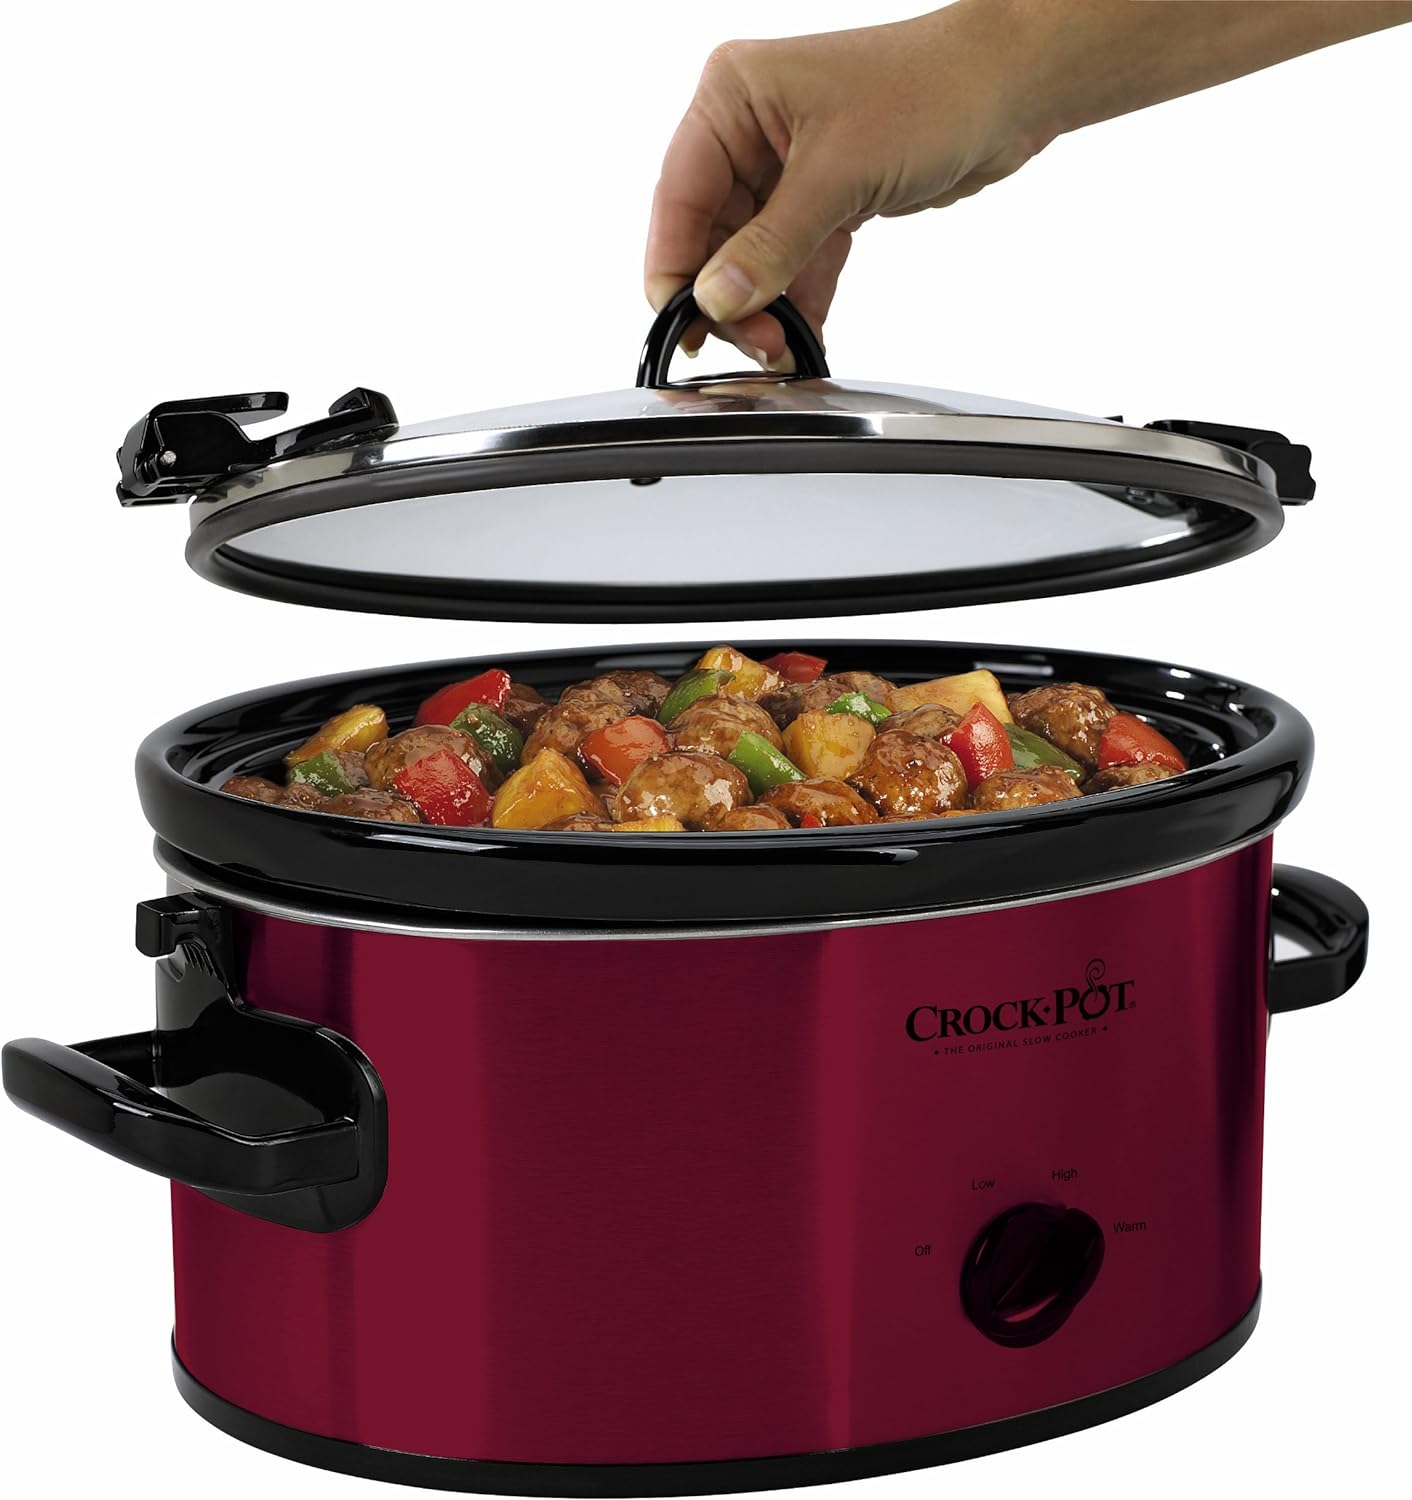 Crock-Pot 6-Quart Cook & Carry Oval Manual Portable Slow Cooker, Red - SCCPVL600-R